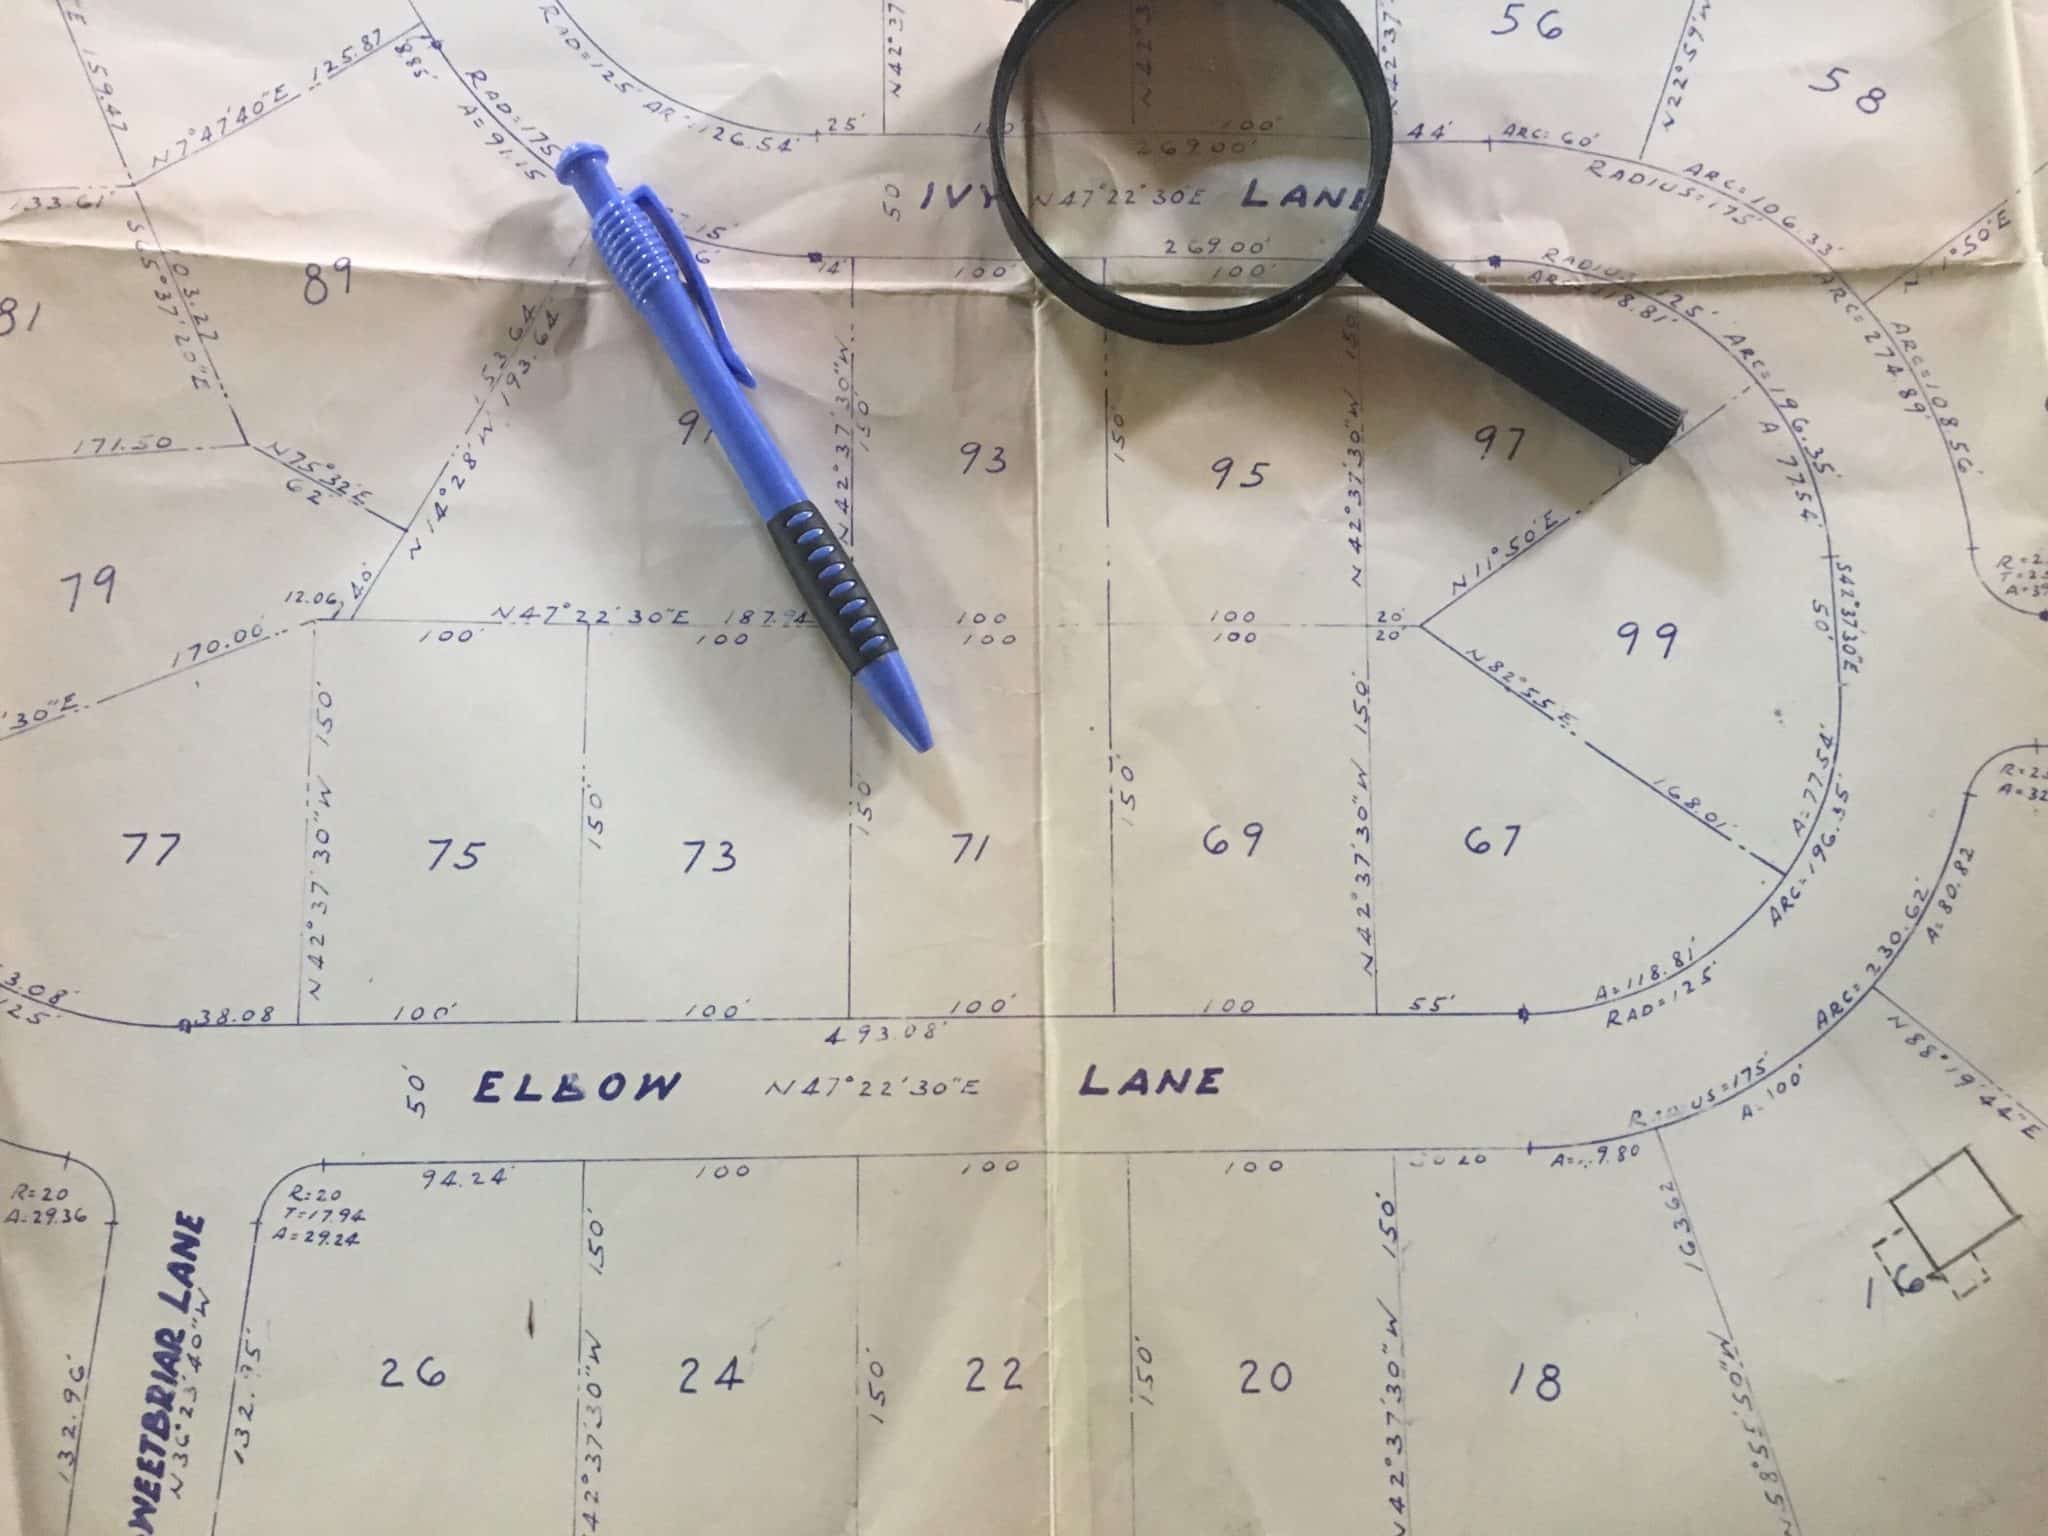 Hand drawn map of neighborhood property lines